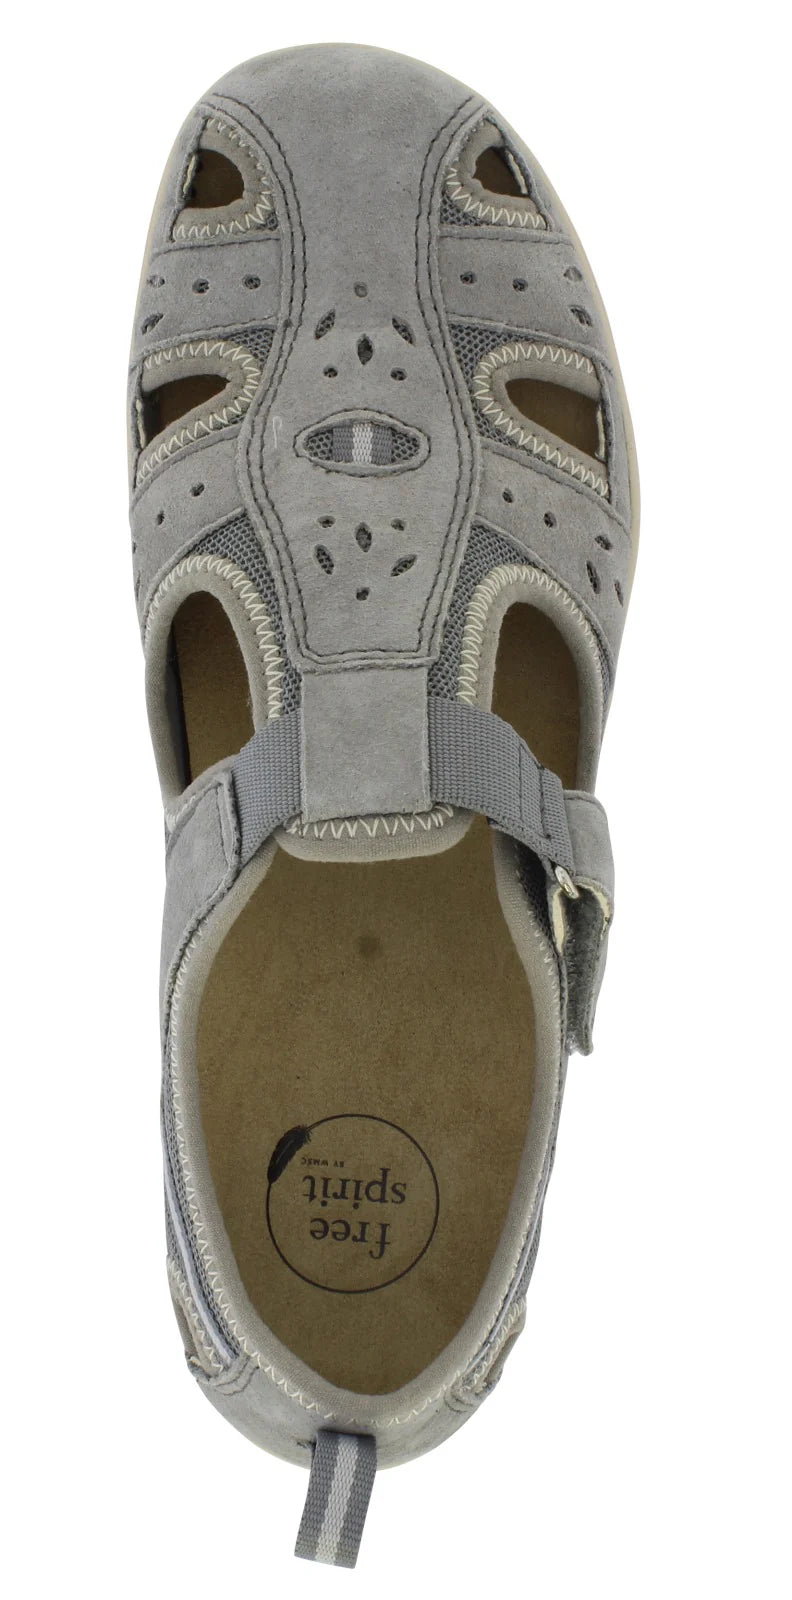 Free Spirit Women's 40500 Cleveland Suede Leather Sandals Smoke Grey